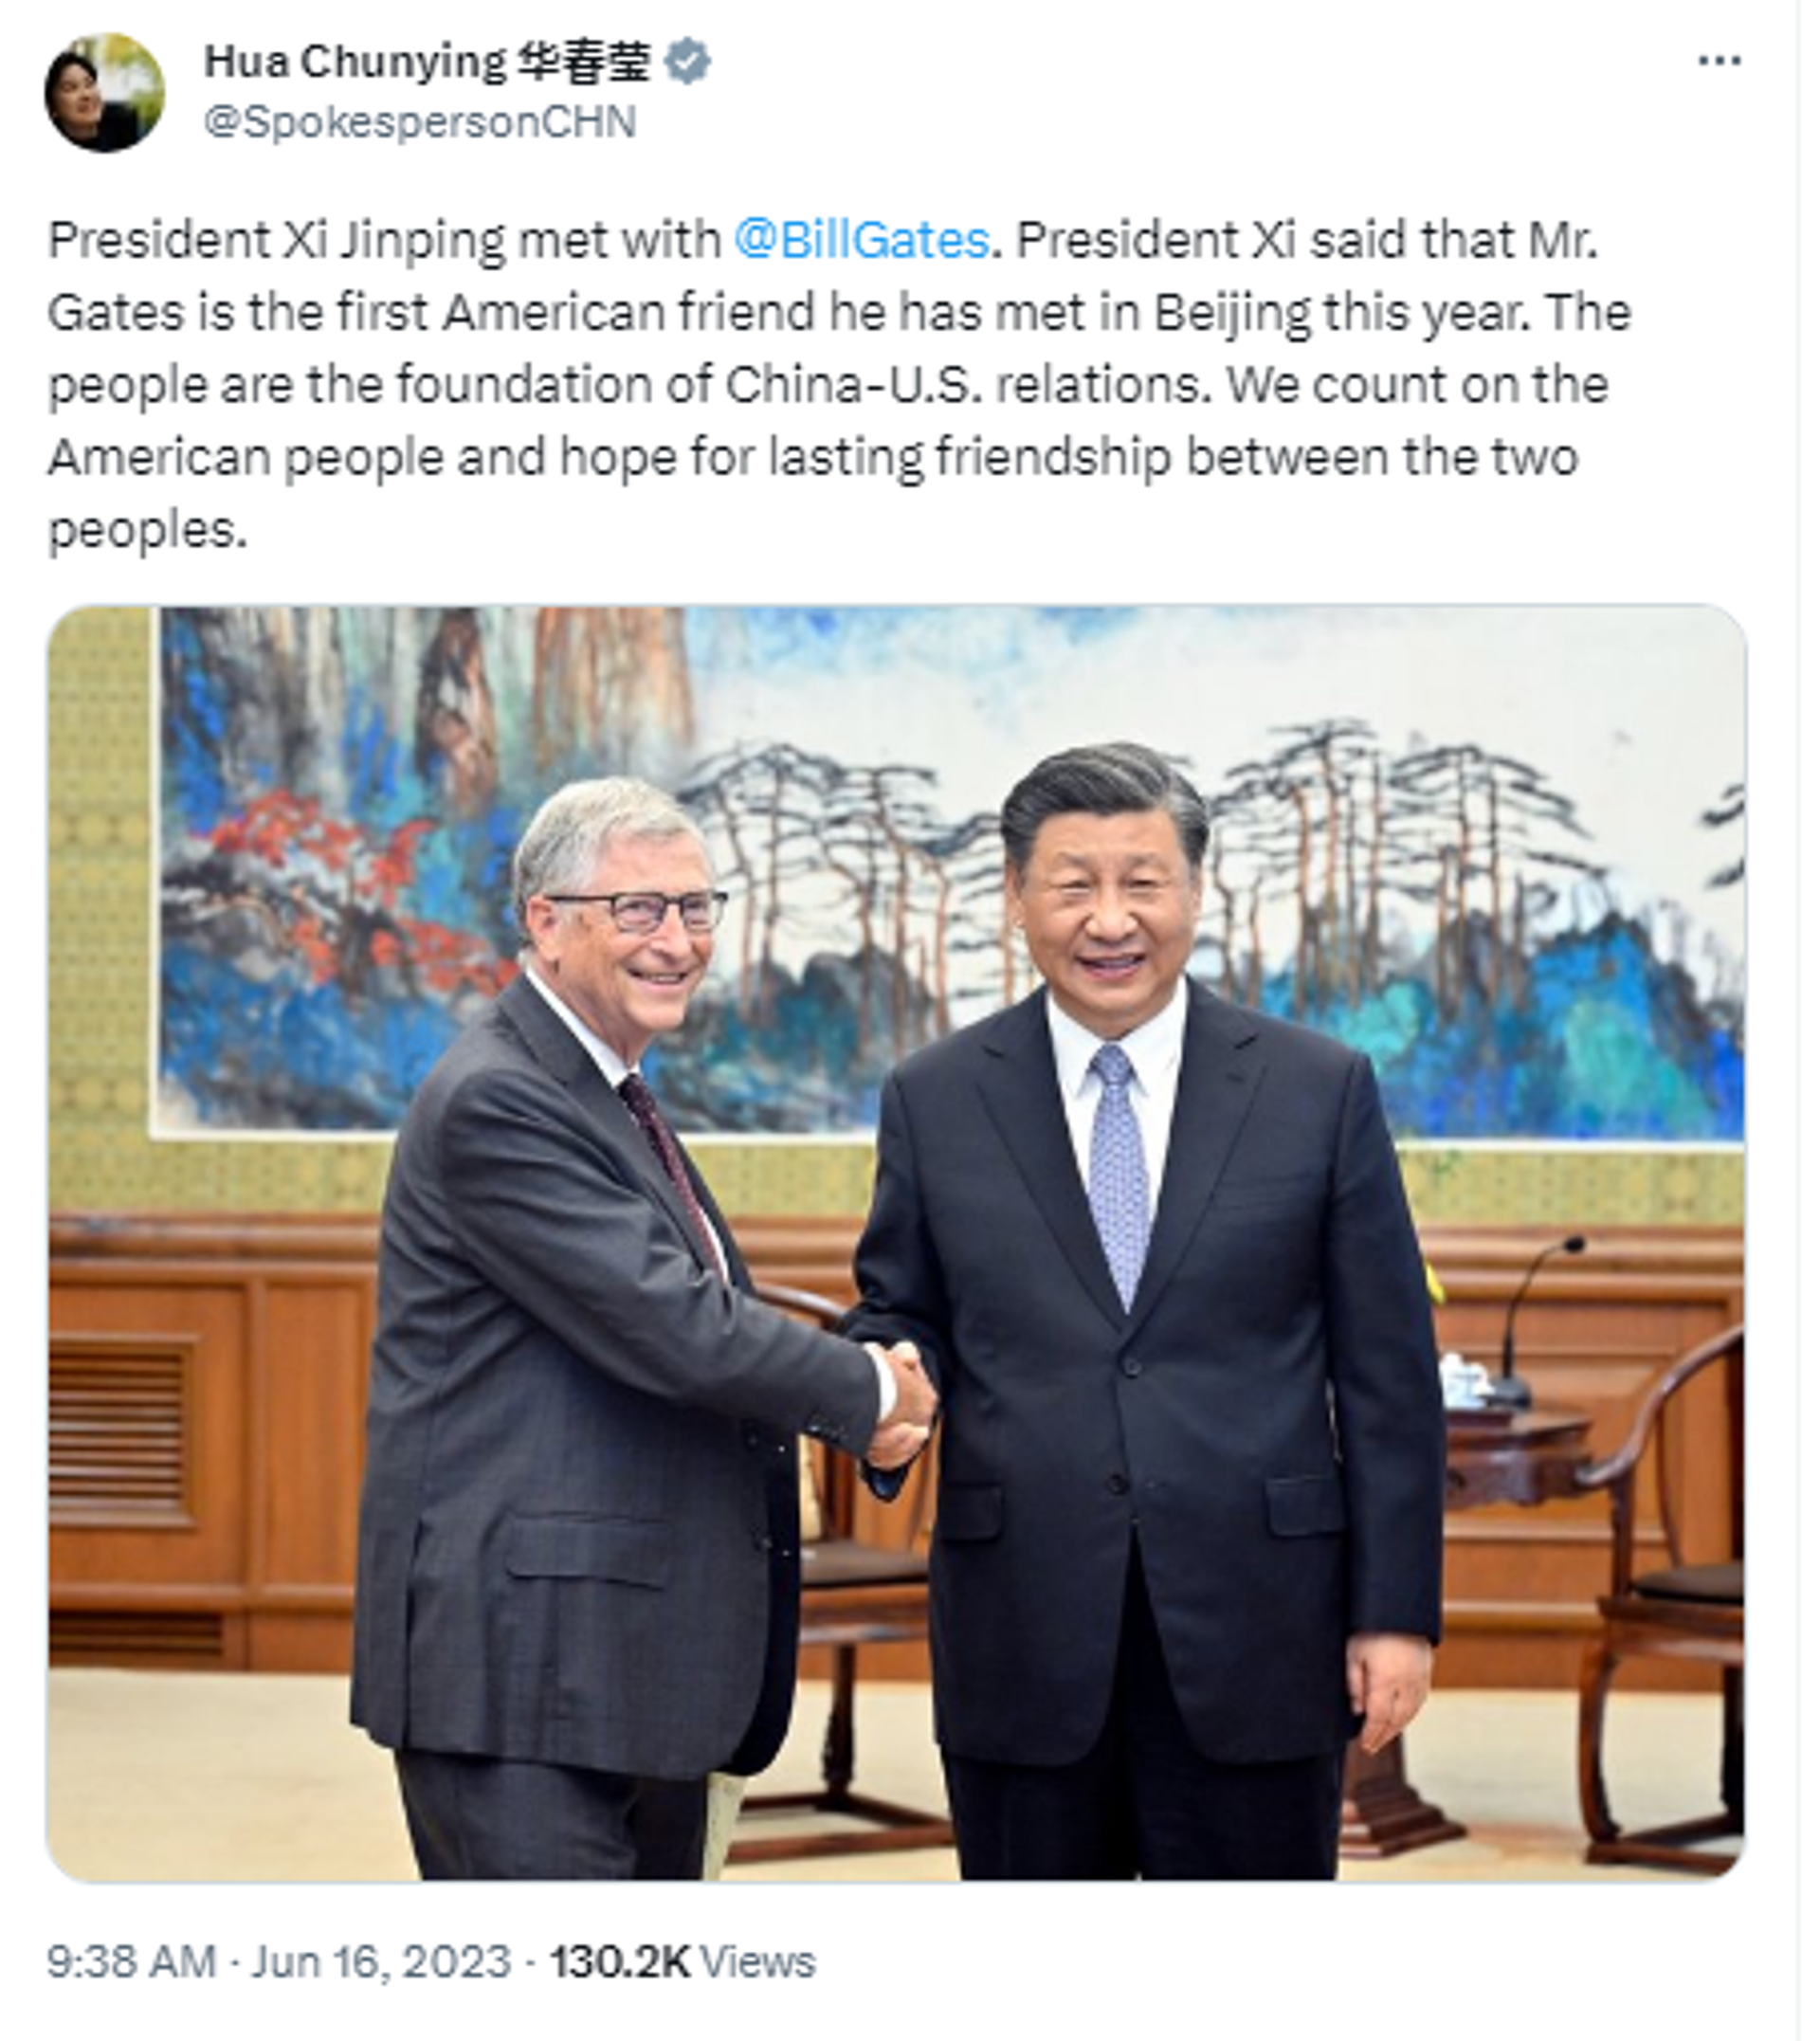 Screenshot of Twitter post by Hua Chunying, China's Foreign Ministry Spokesperson. - Sputnik International, 1920, 16.06.2023